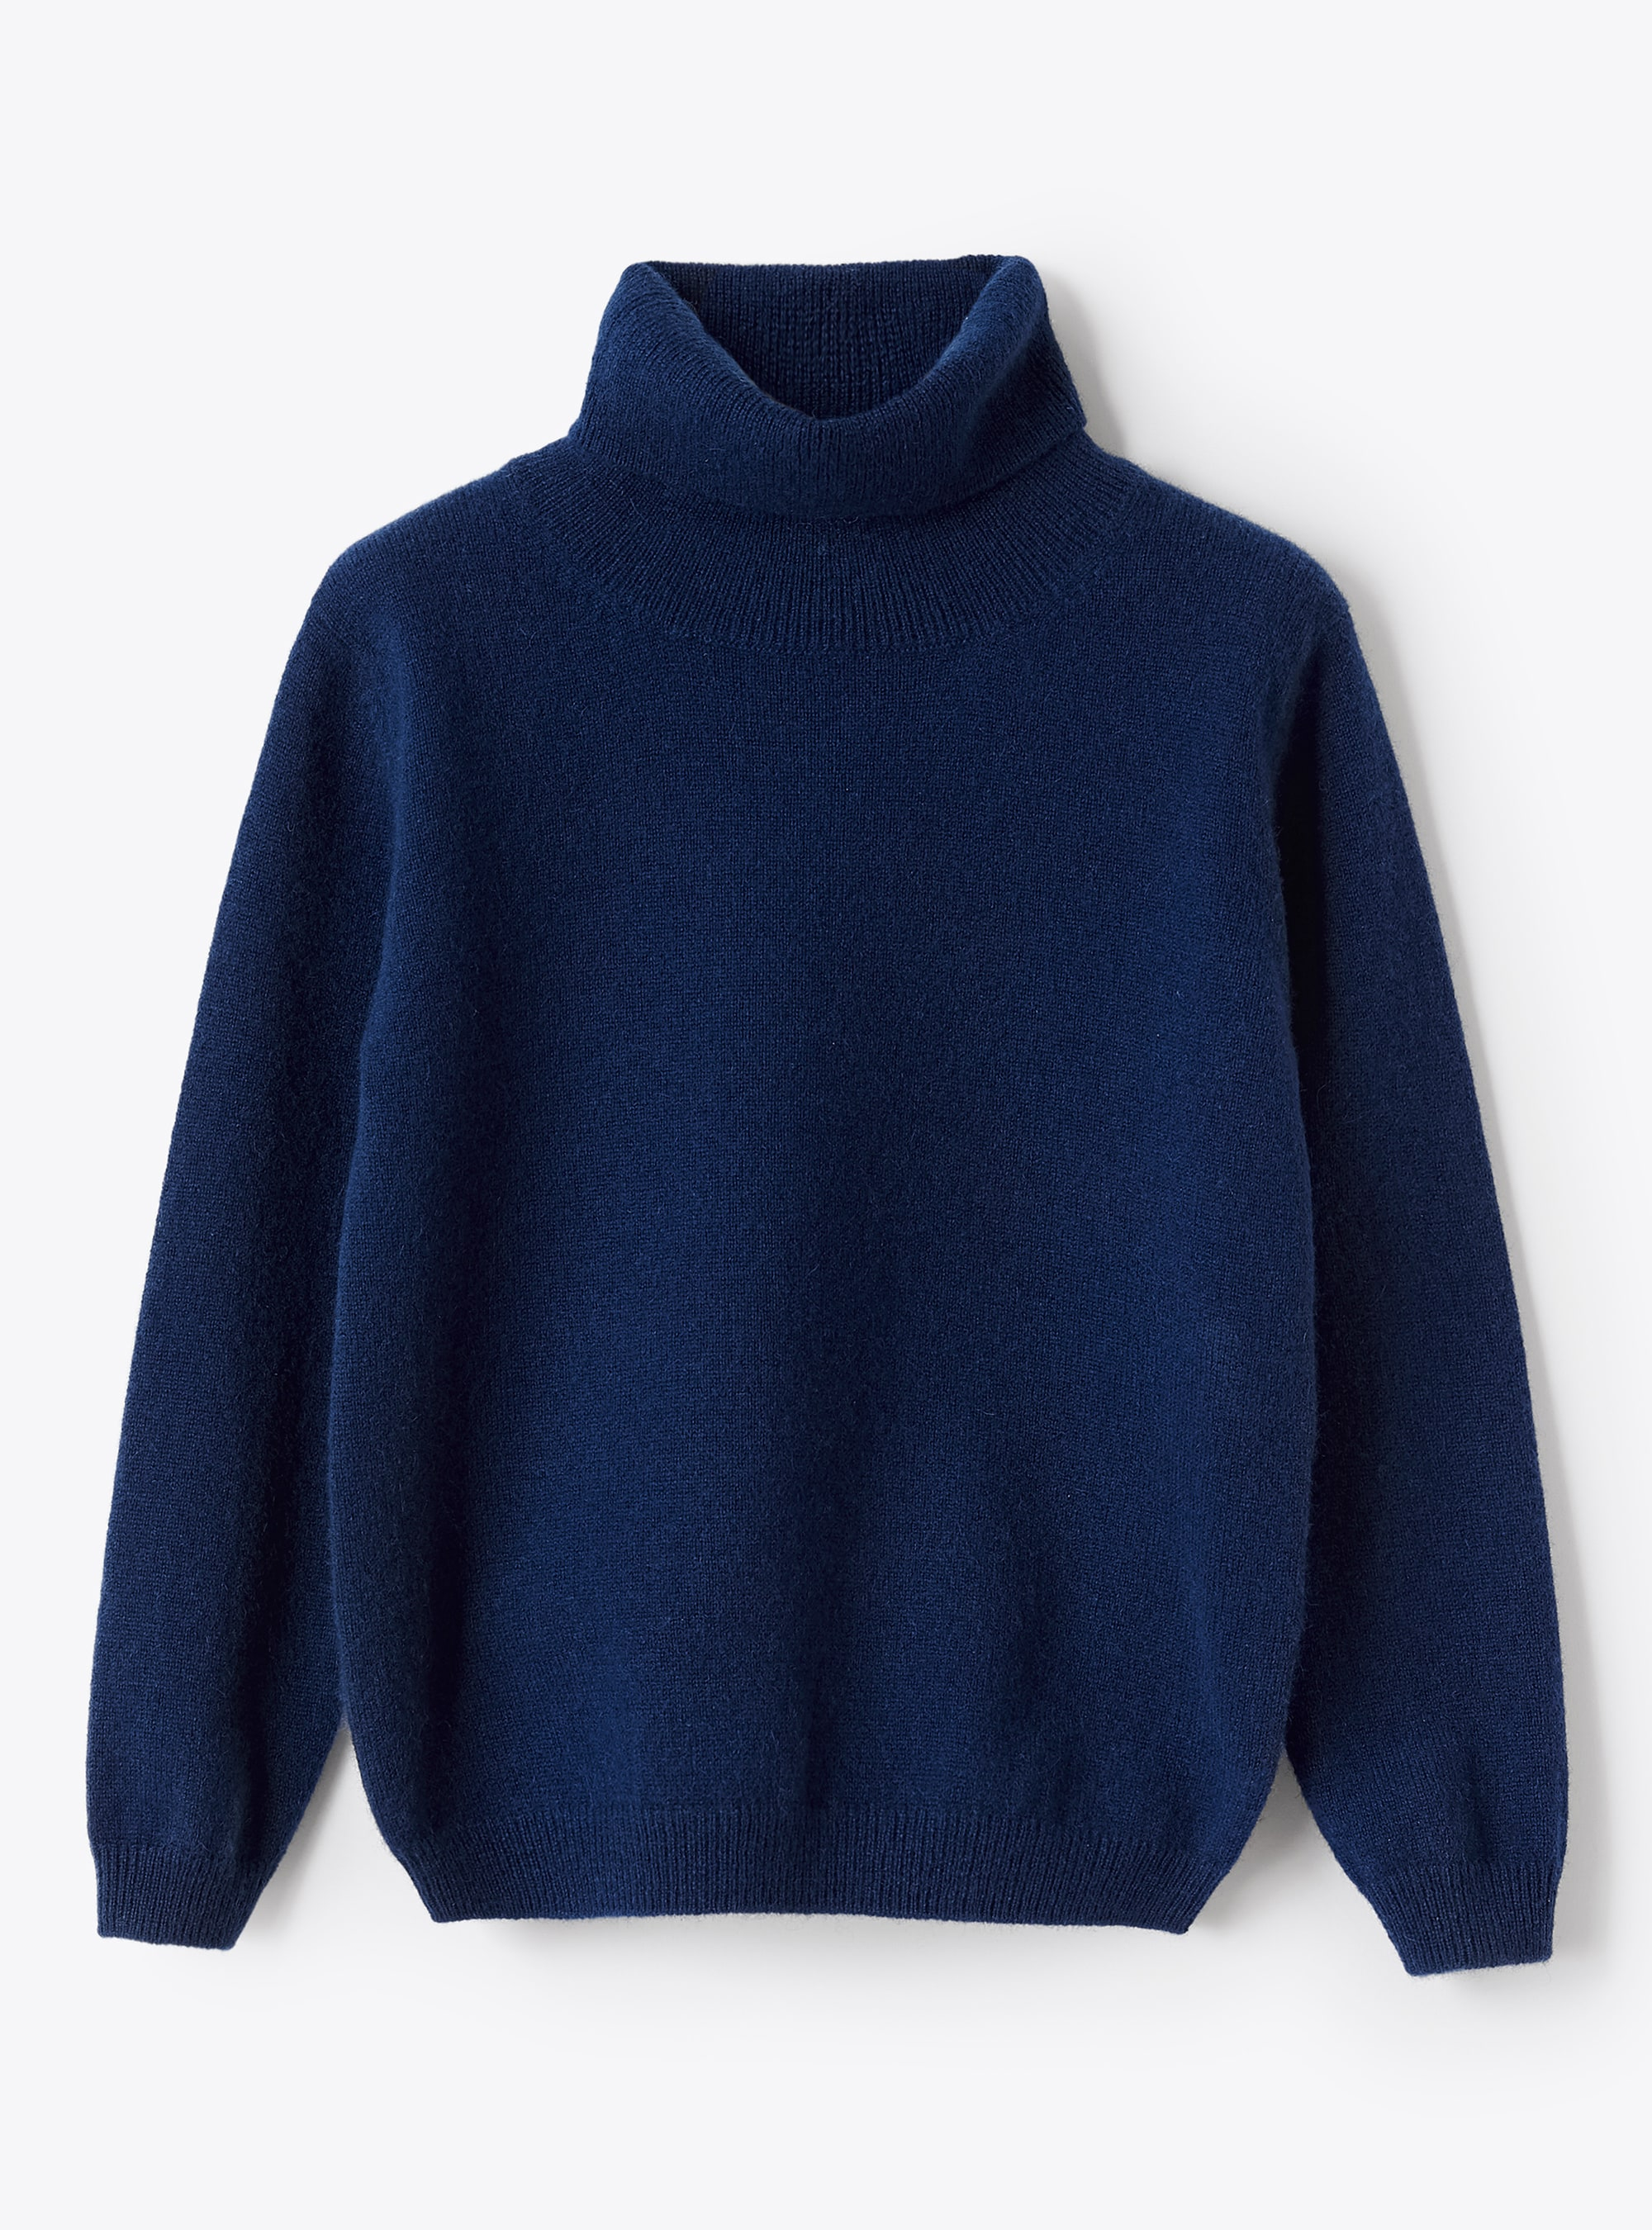 Cornflower blue cashmere turtleneck sweater - Sweaters - Il Gufo